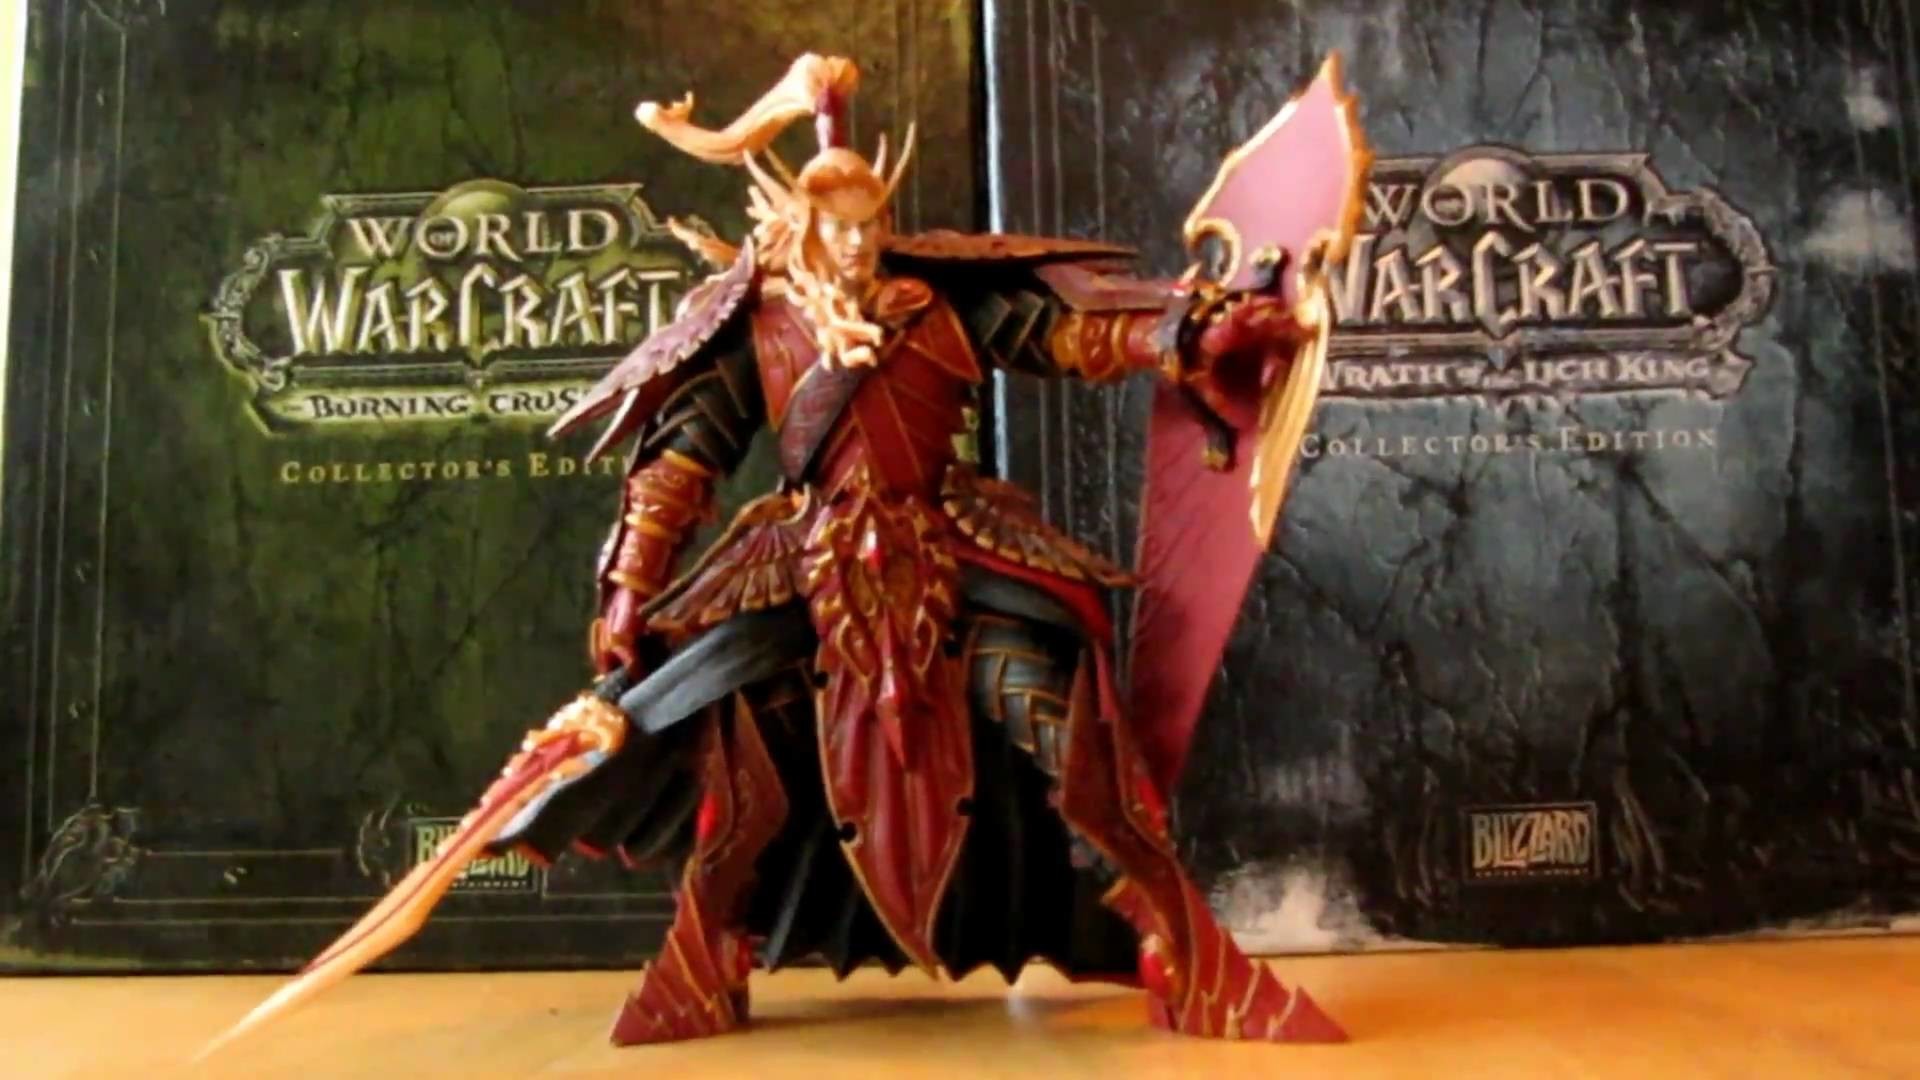 1920x1080 World of Warcraft Action Figure Blood Elf Paladin Quin'Thalan Sunfire -  YouTube